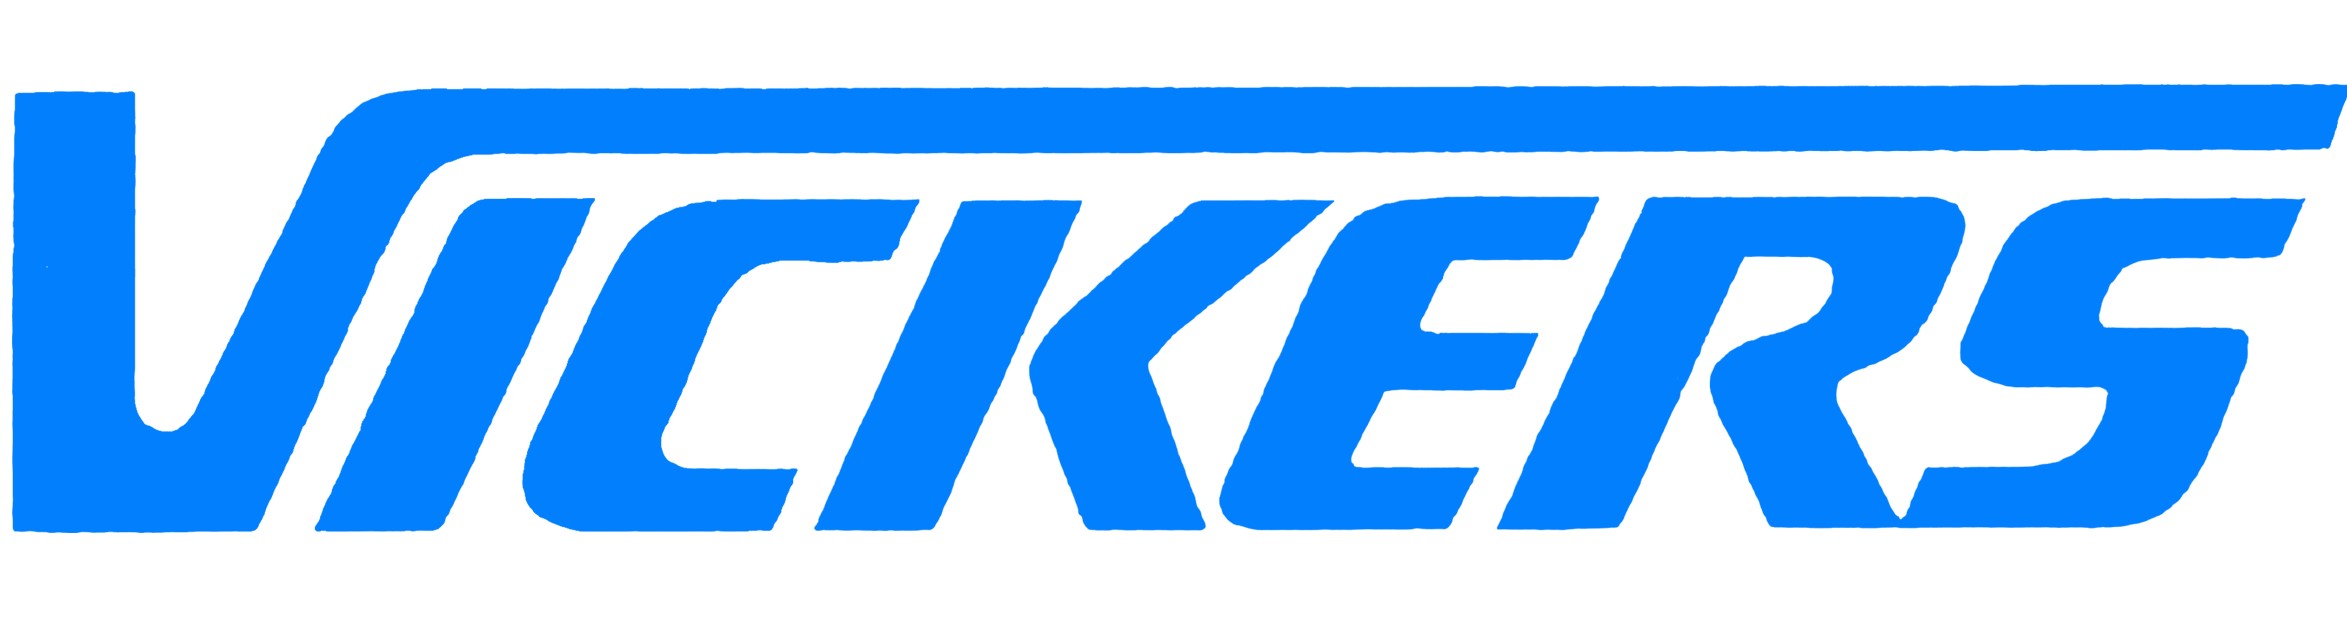 Logo VICKERS